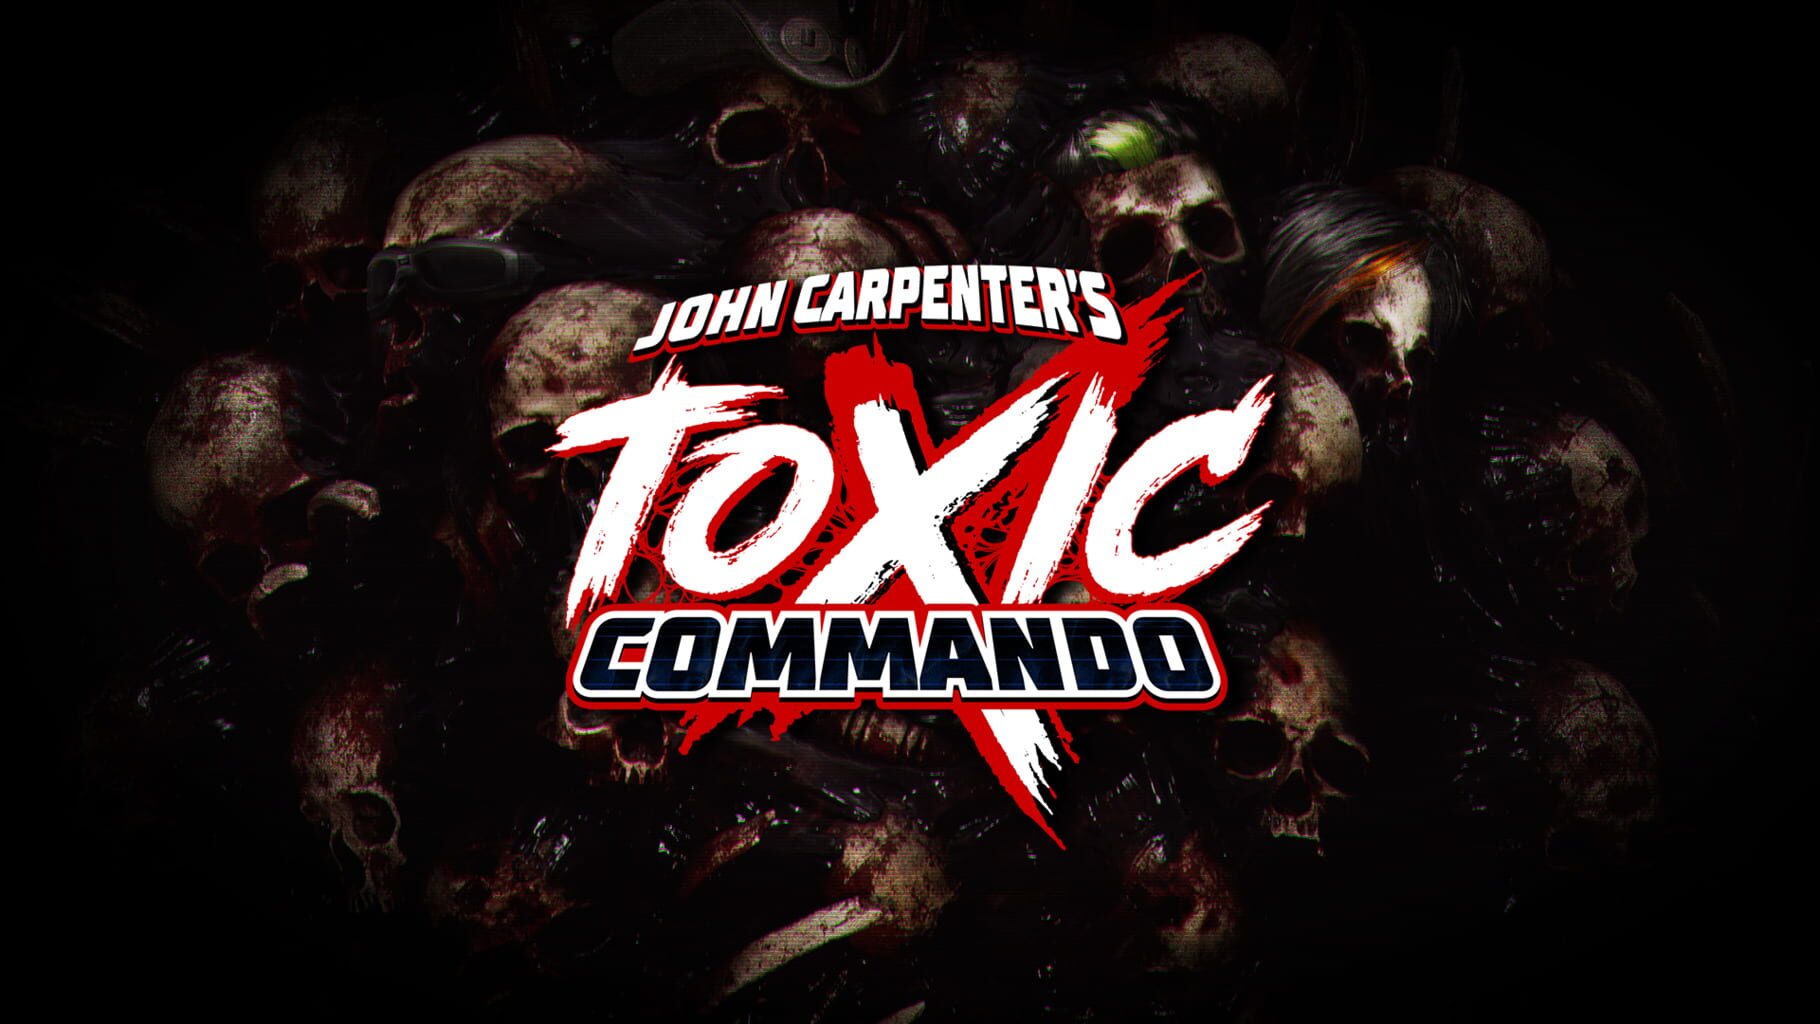 Artwork for John Carpenter's Toxic Commando